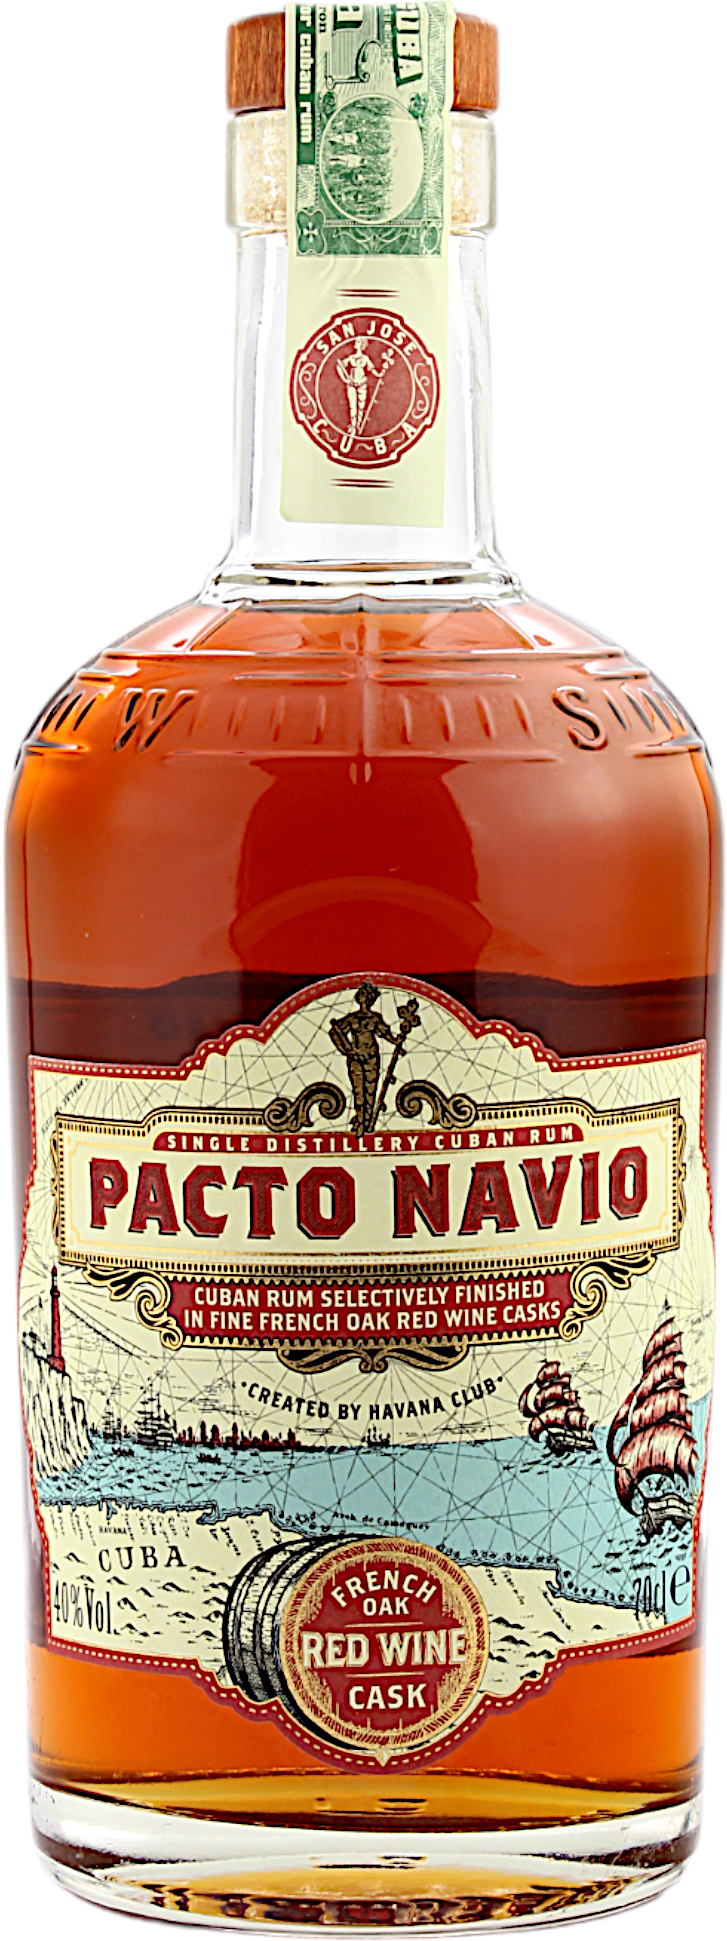 Havana Club Pacto Navio French Oak Red Wine Casks 40.0% 0,7l